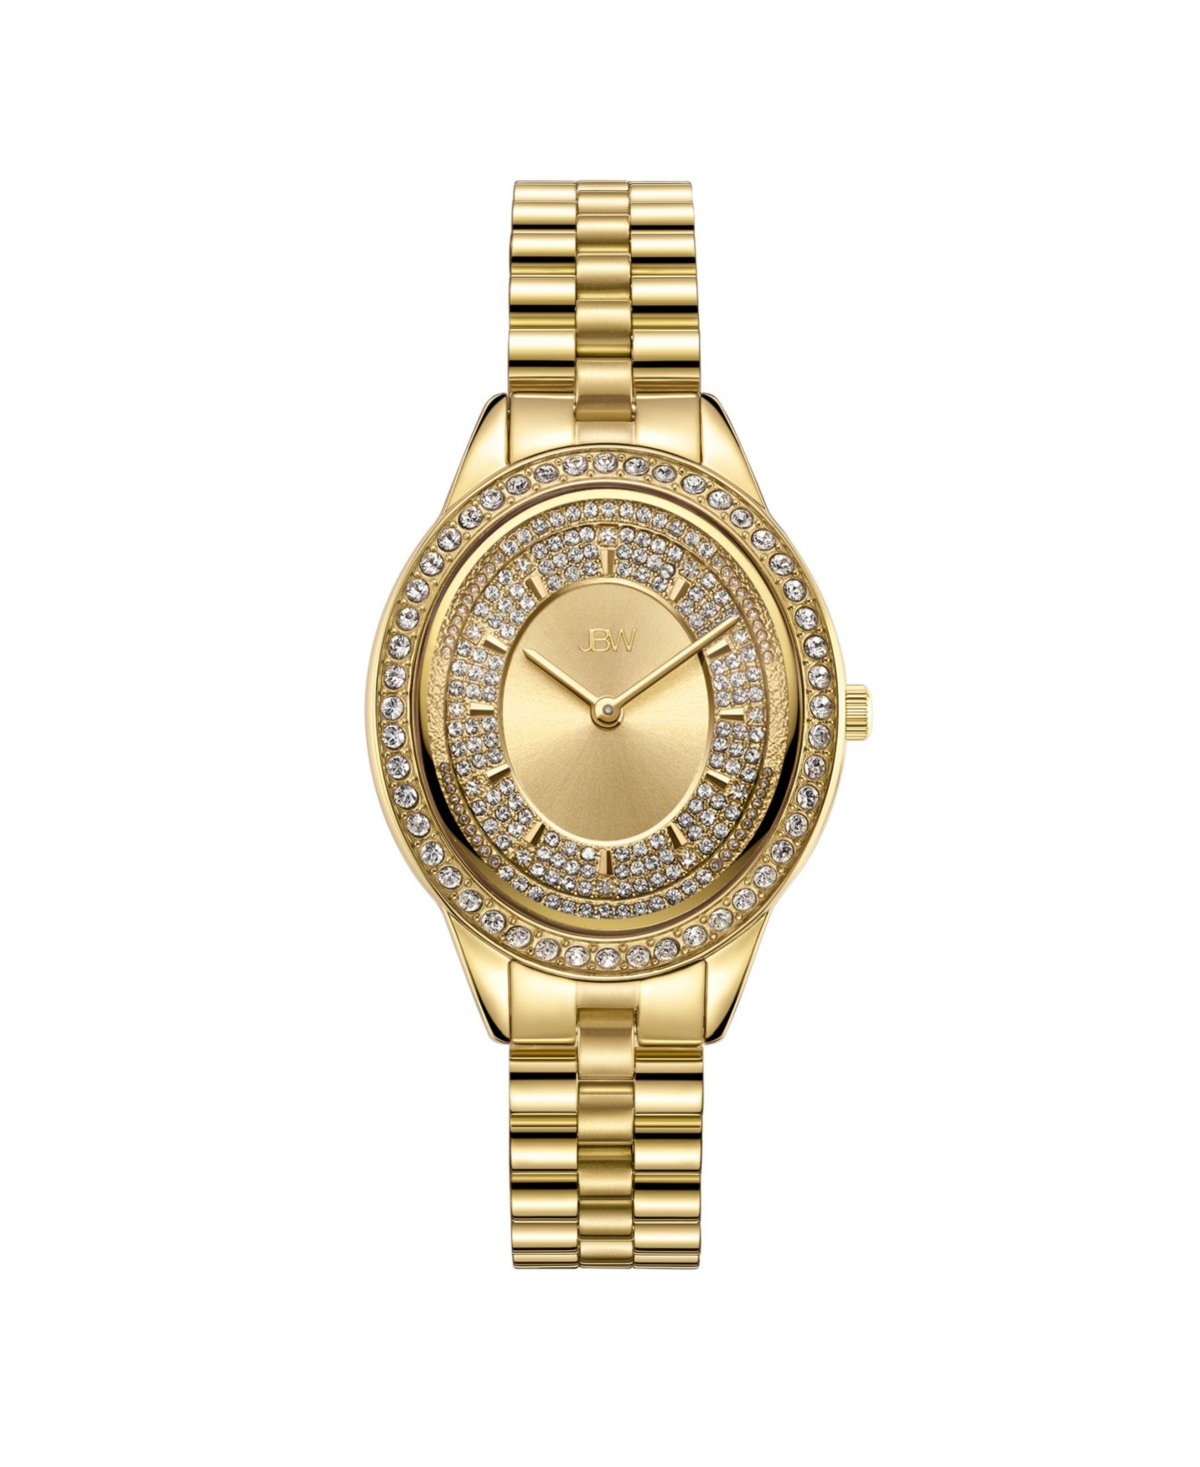 Women's Bellini Diamond (1/8 ct. t.w.) Watch in 18k Gold-plated Stainless-steel Watch 30mm - Gold